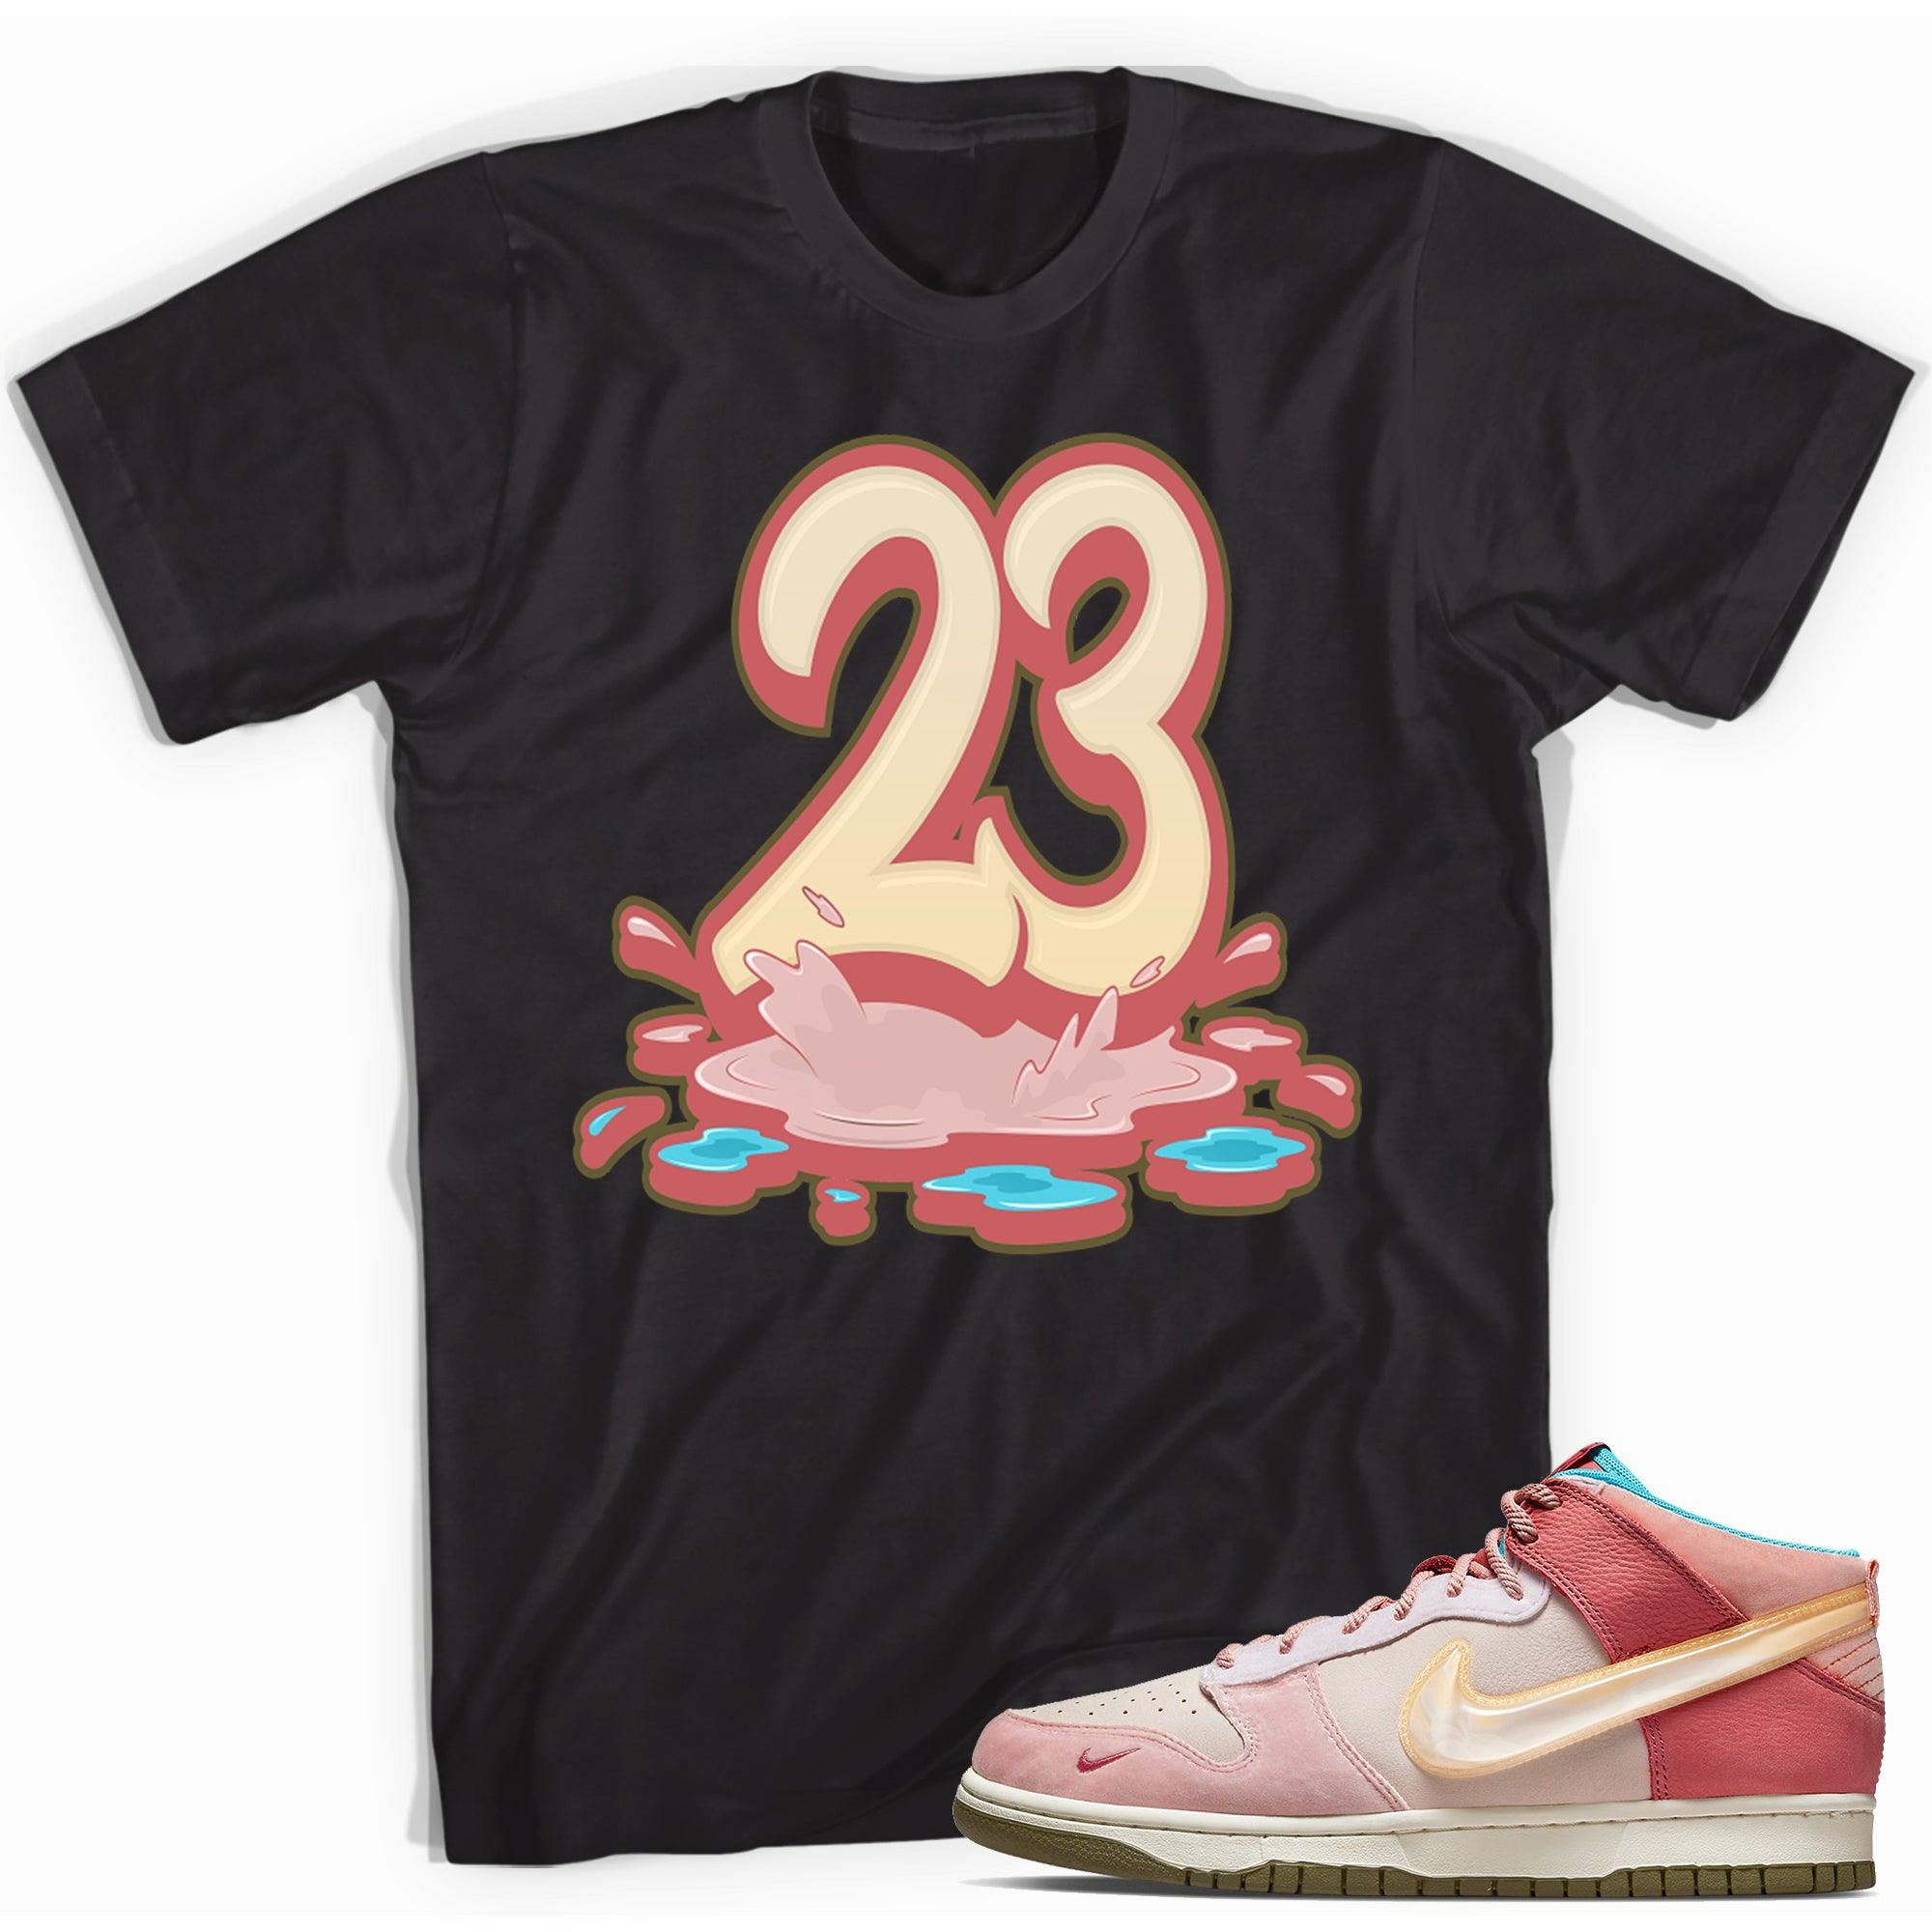 Number 23 Melting Shirt Nike Dunks Mid Social Status Free Lunch Strawberry Milk photo